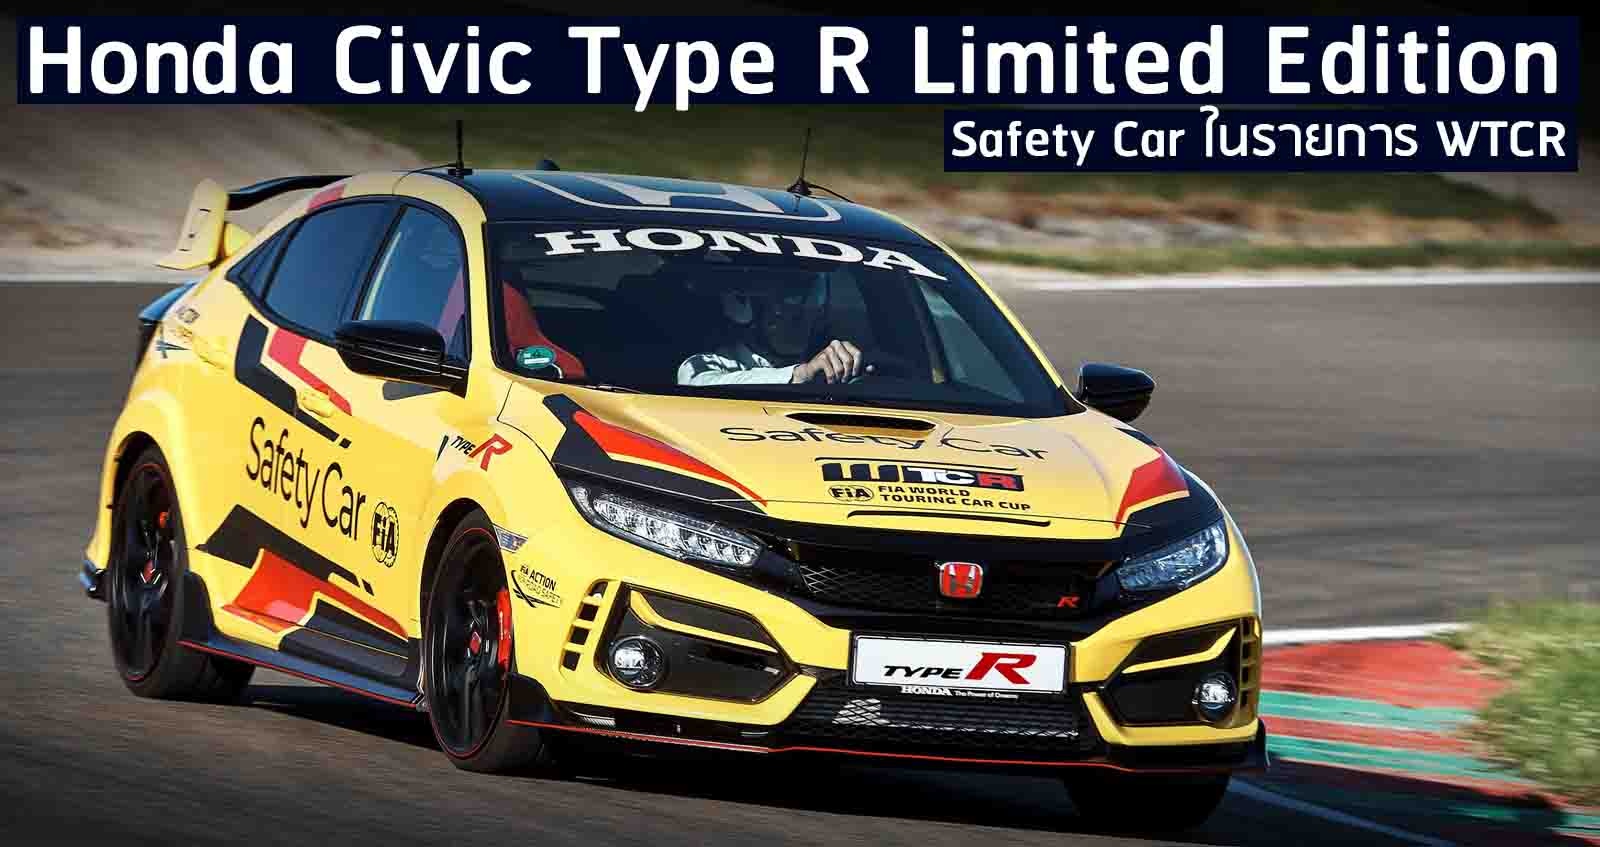 Honda Civic Type R Limited Edition รถยนต์ Safety Car ในรายการ WTCR 2020